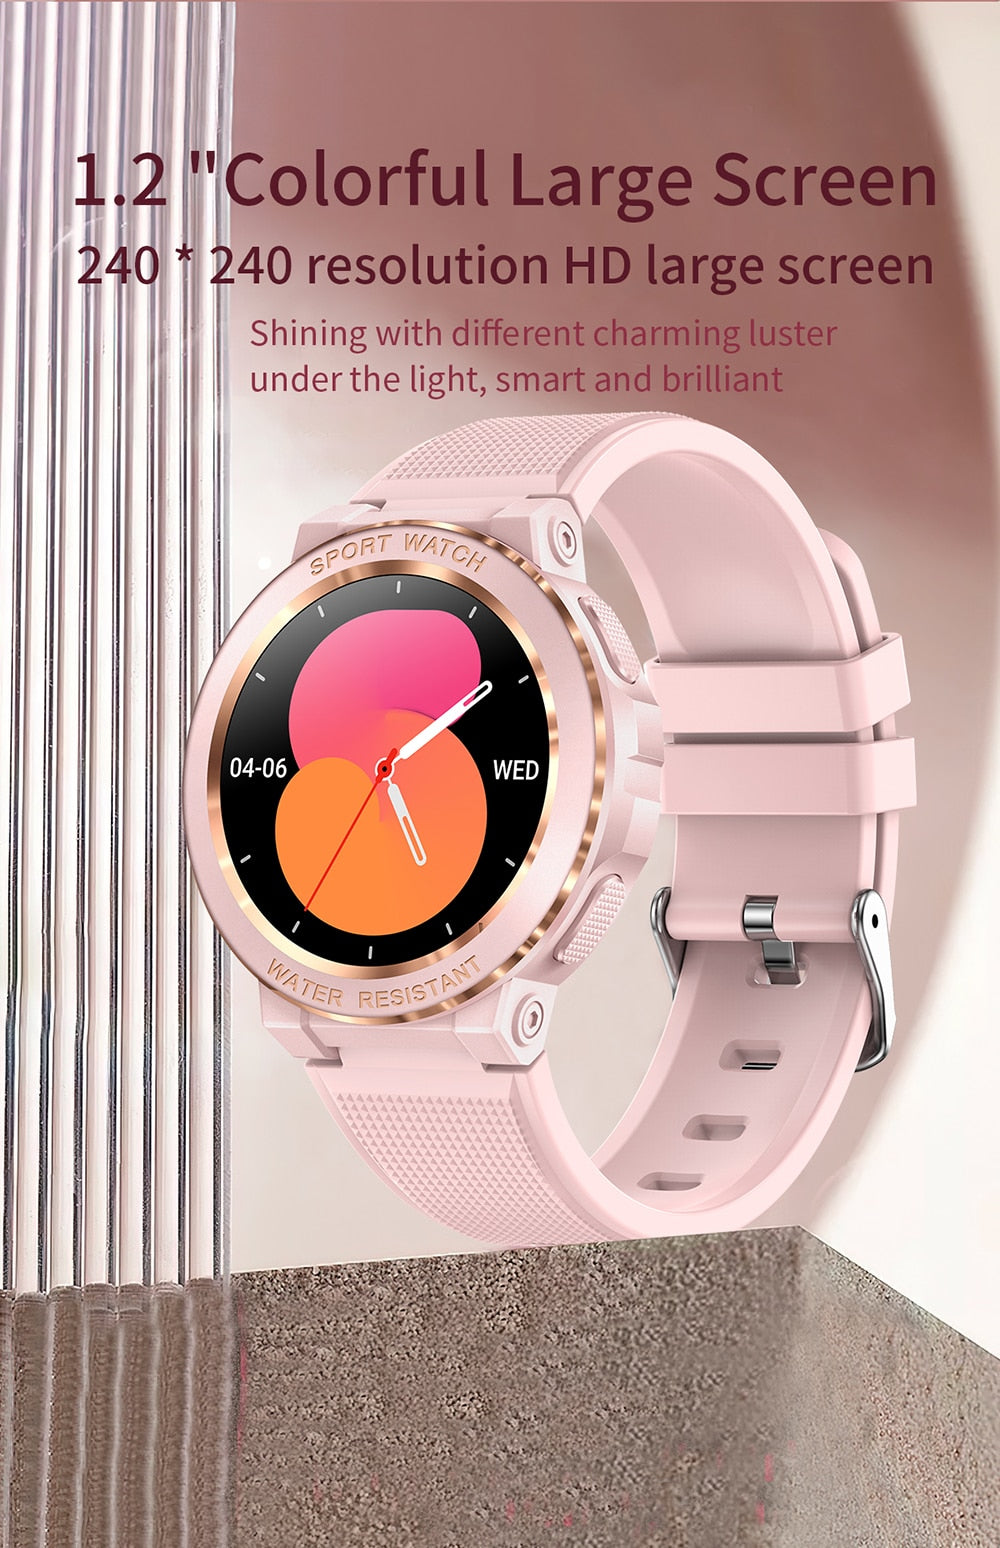 Sleek women's smartwatch design